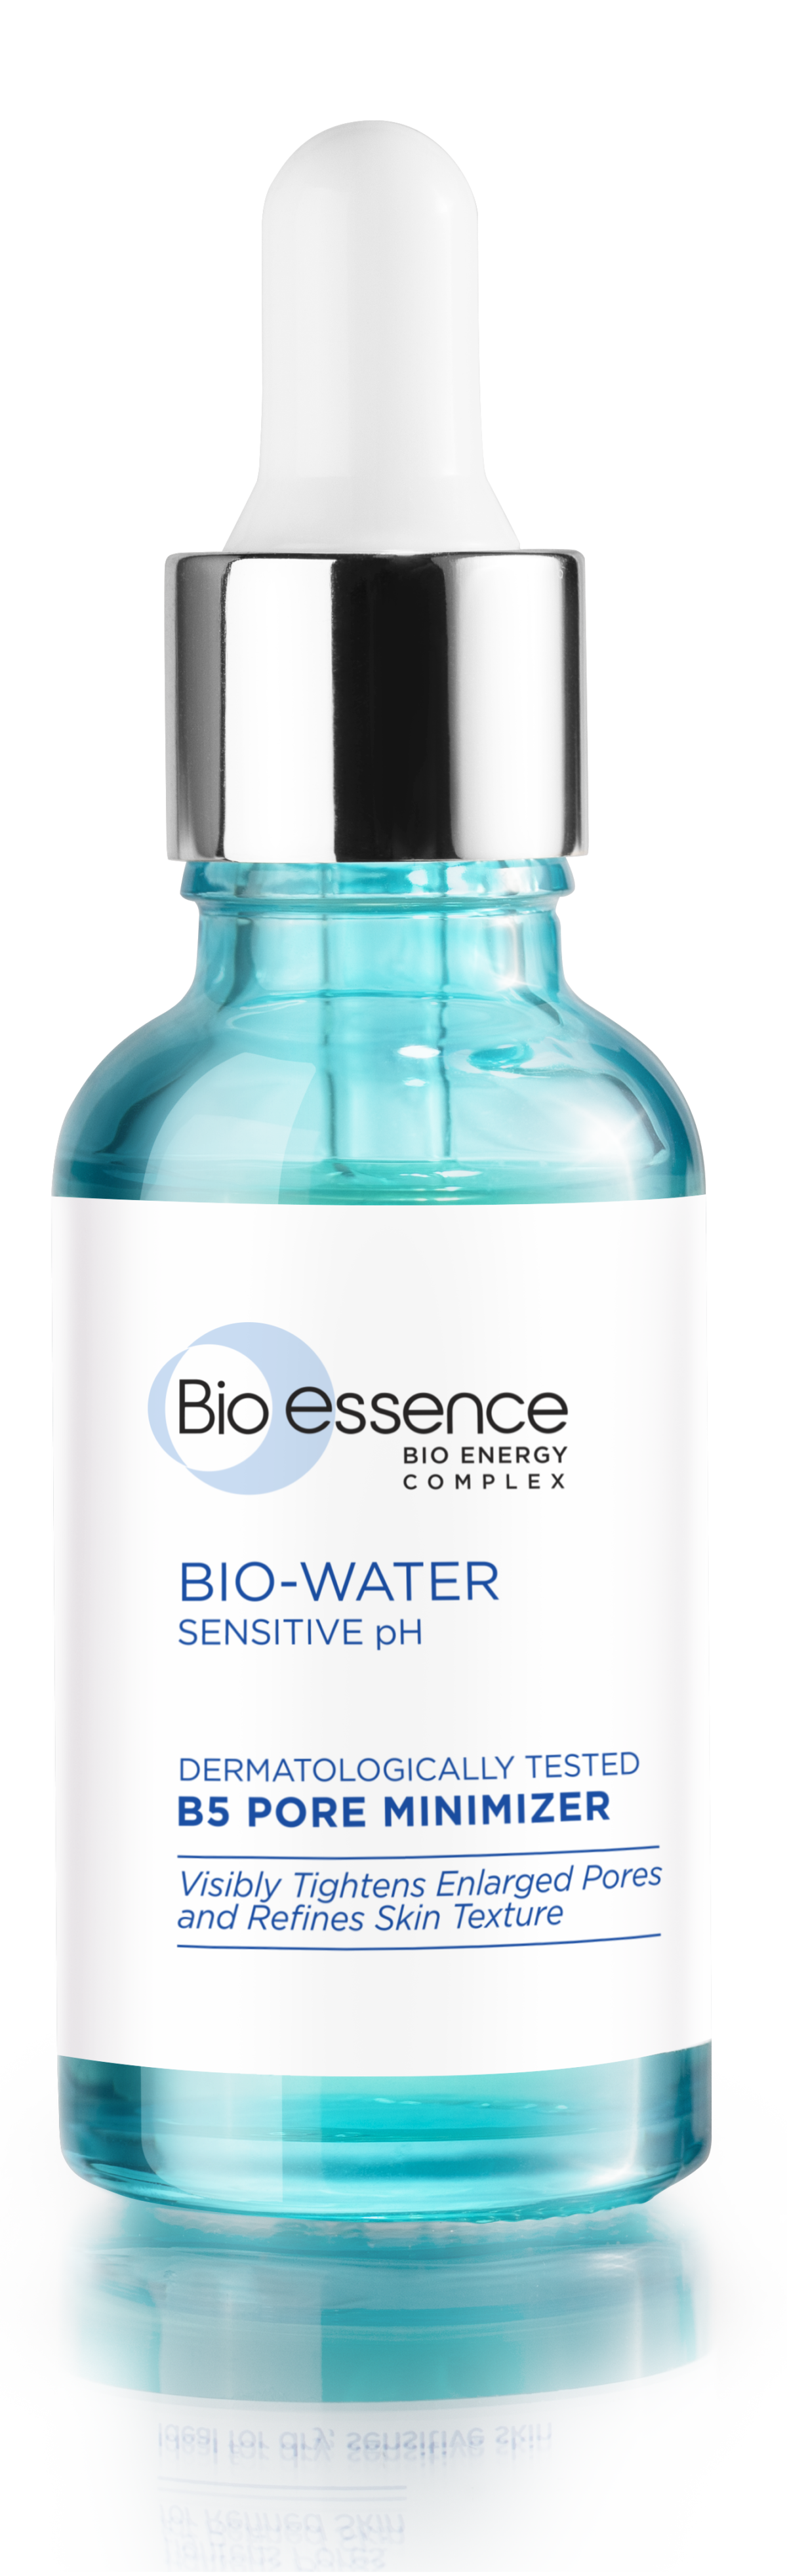 Bio-Water B5 Pore Minimizer